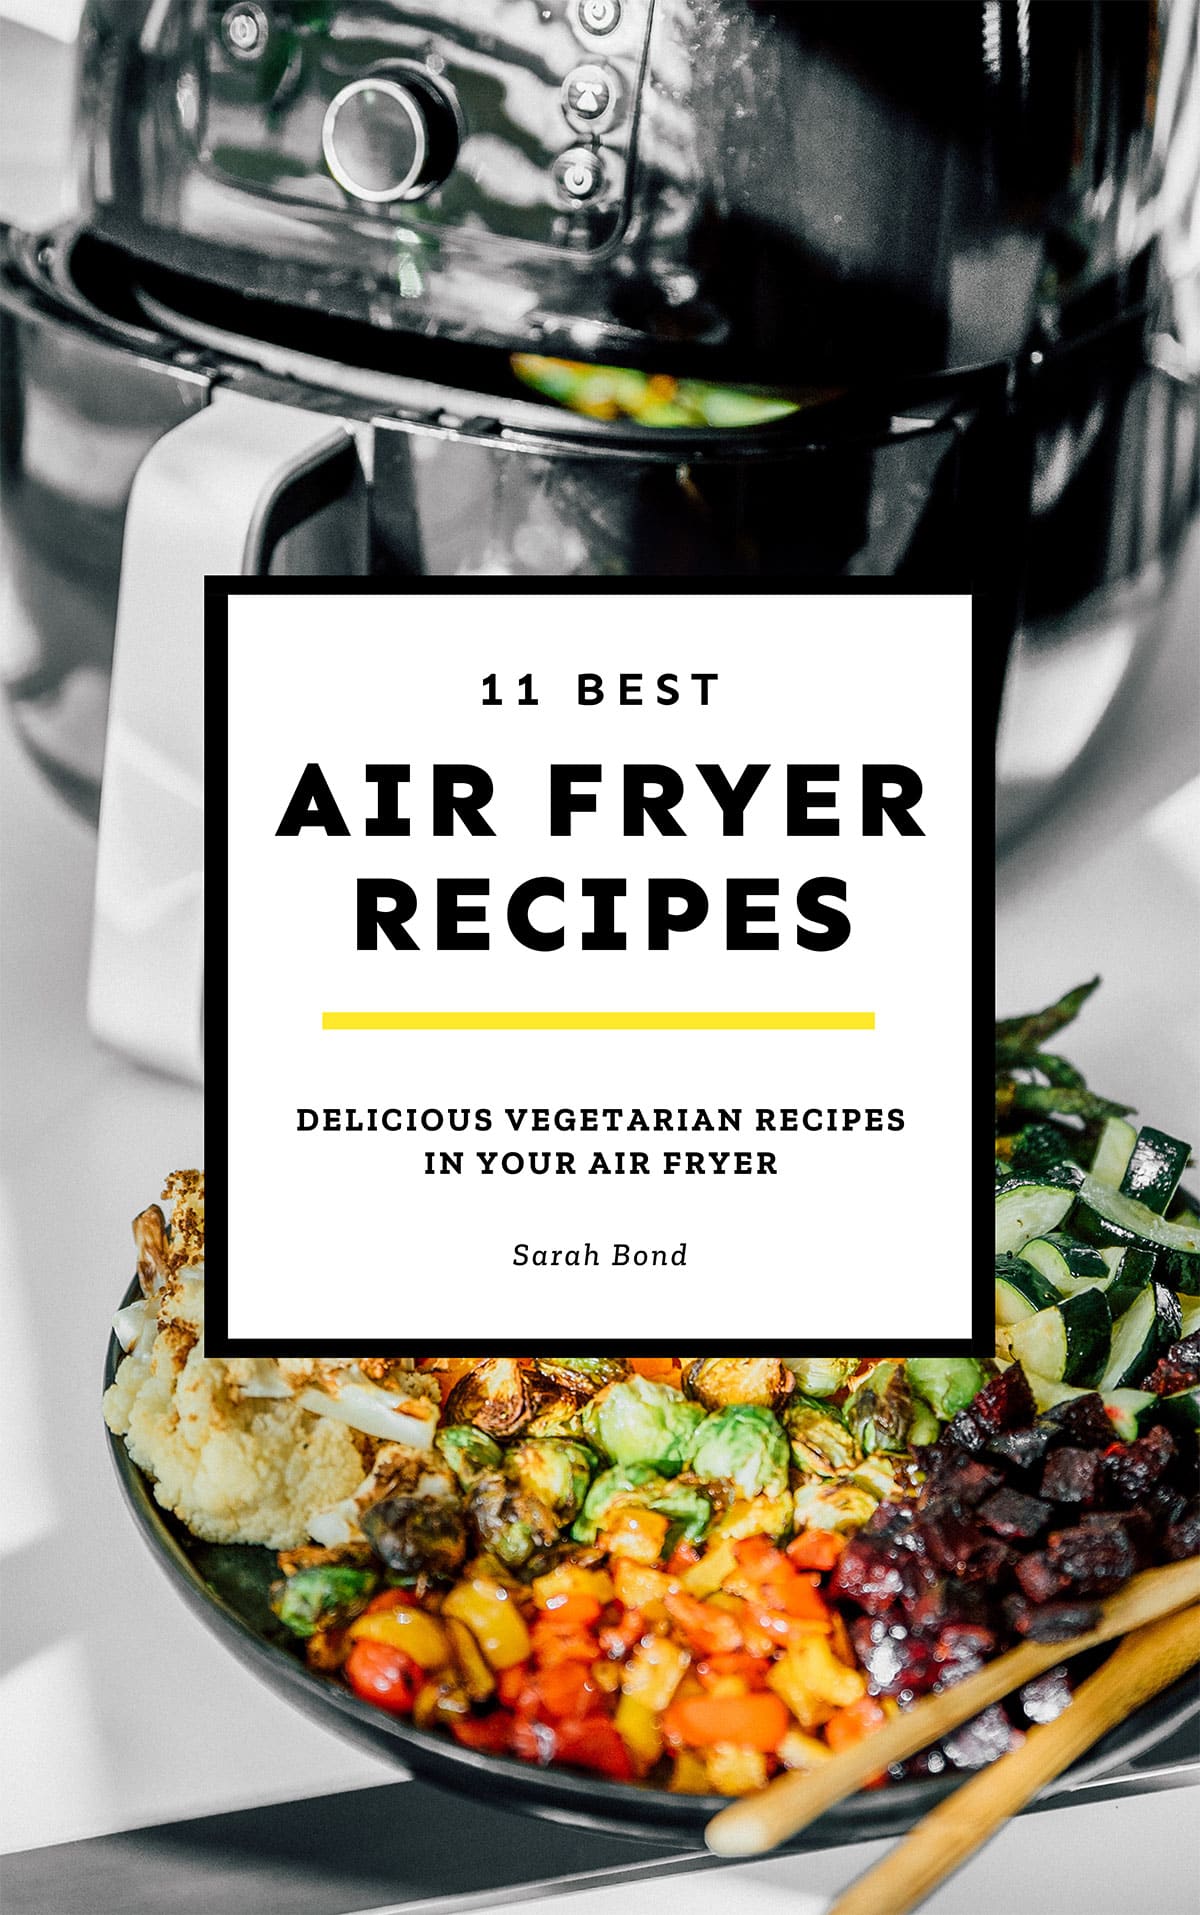 Air fryer recipes cookbook cover.